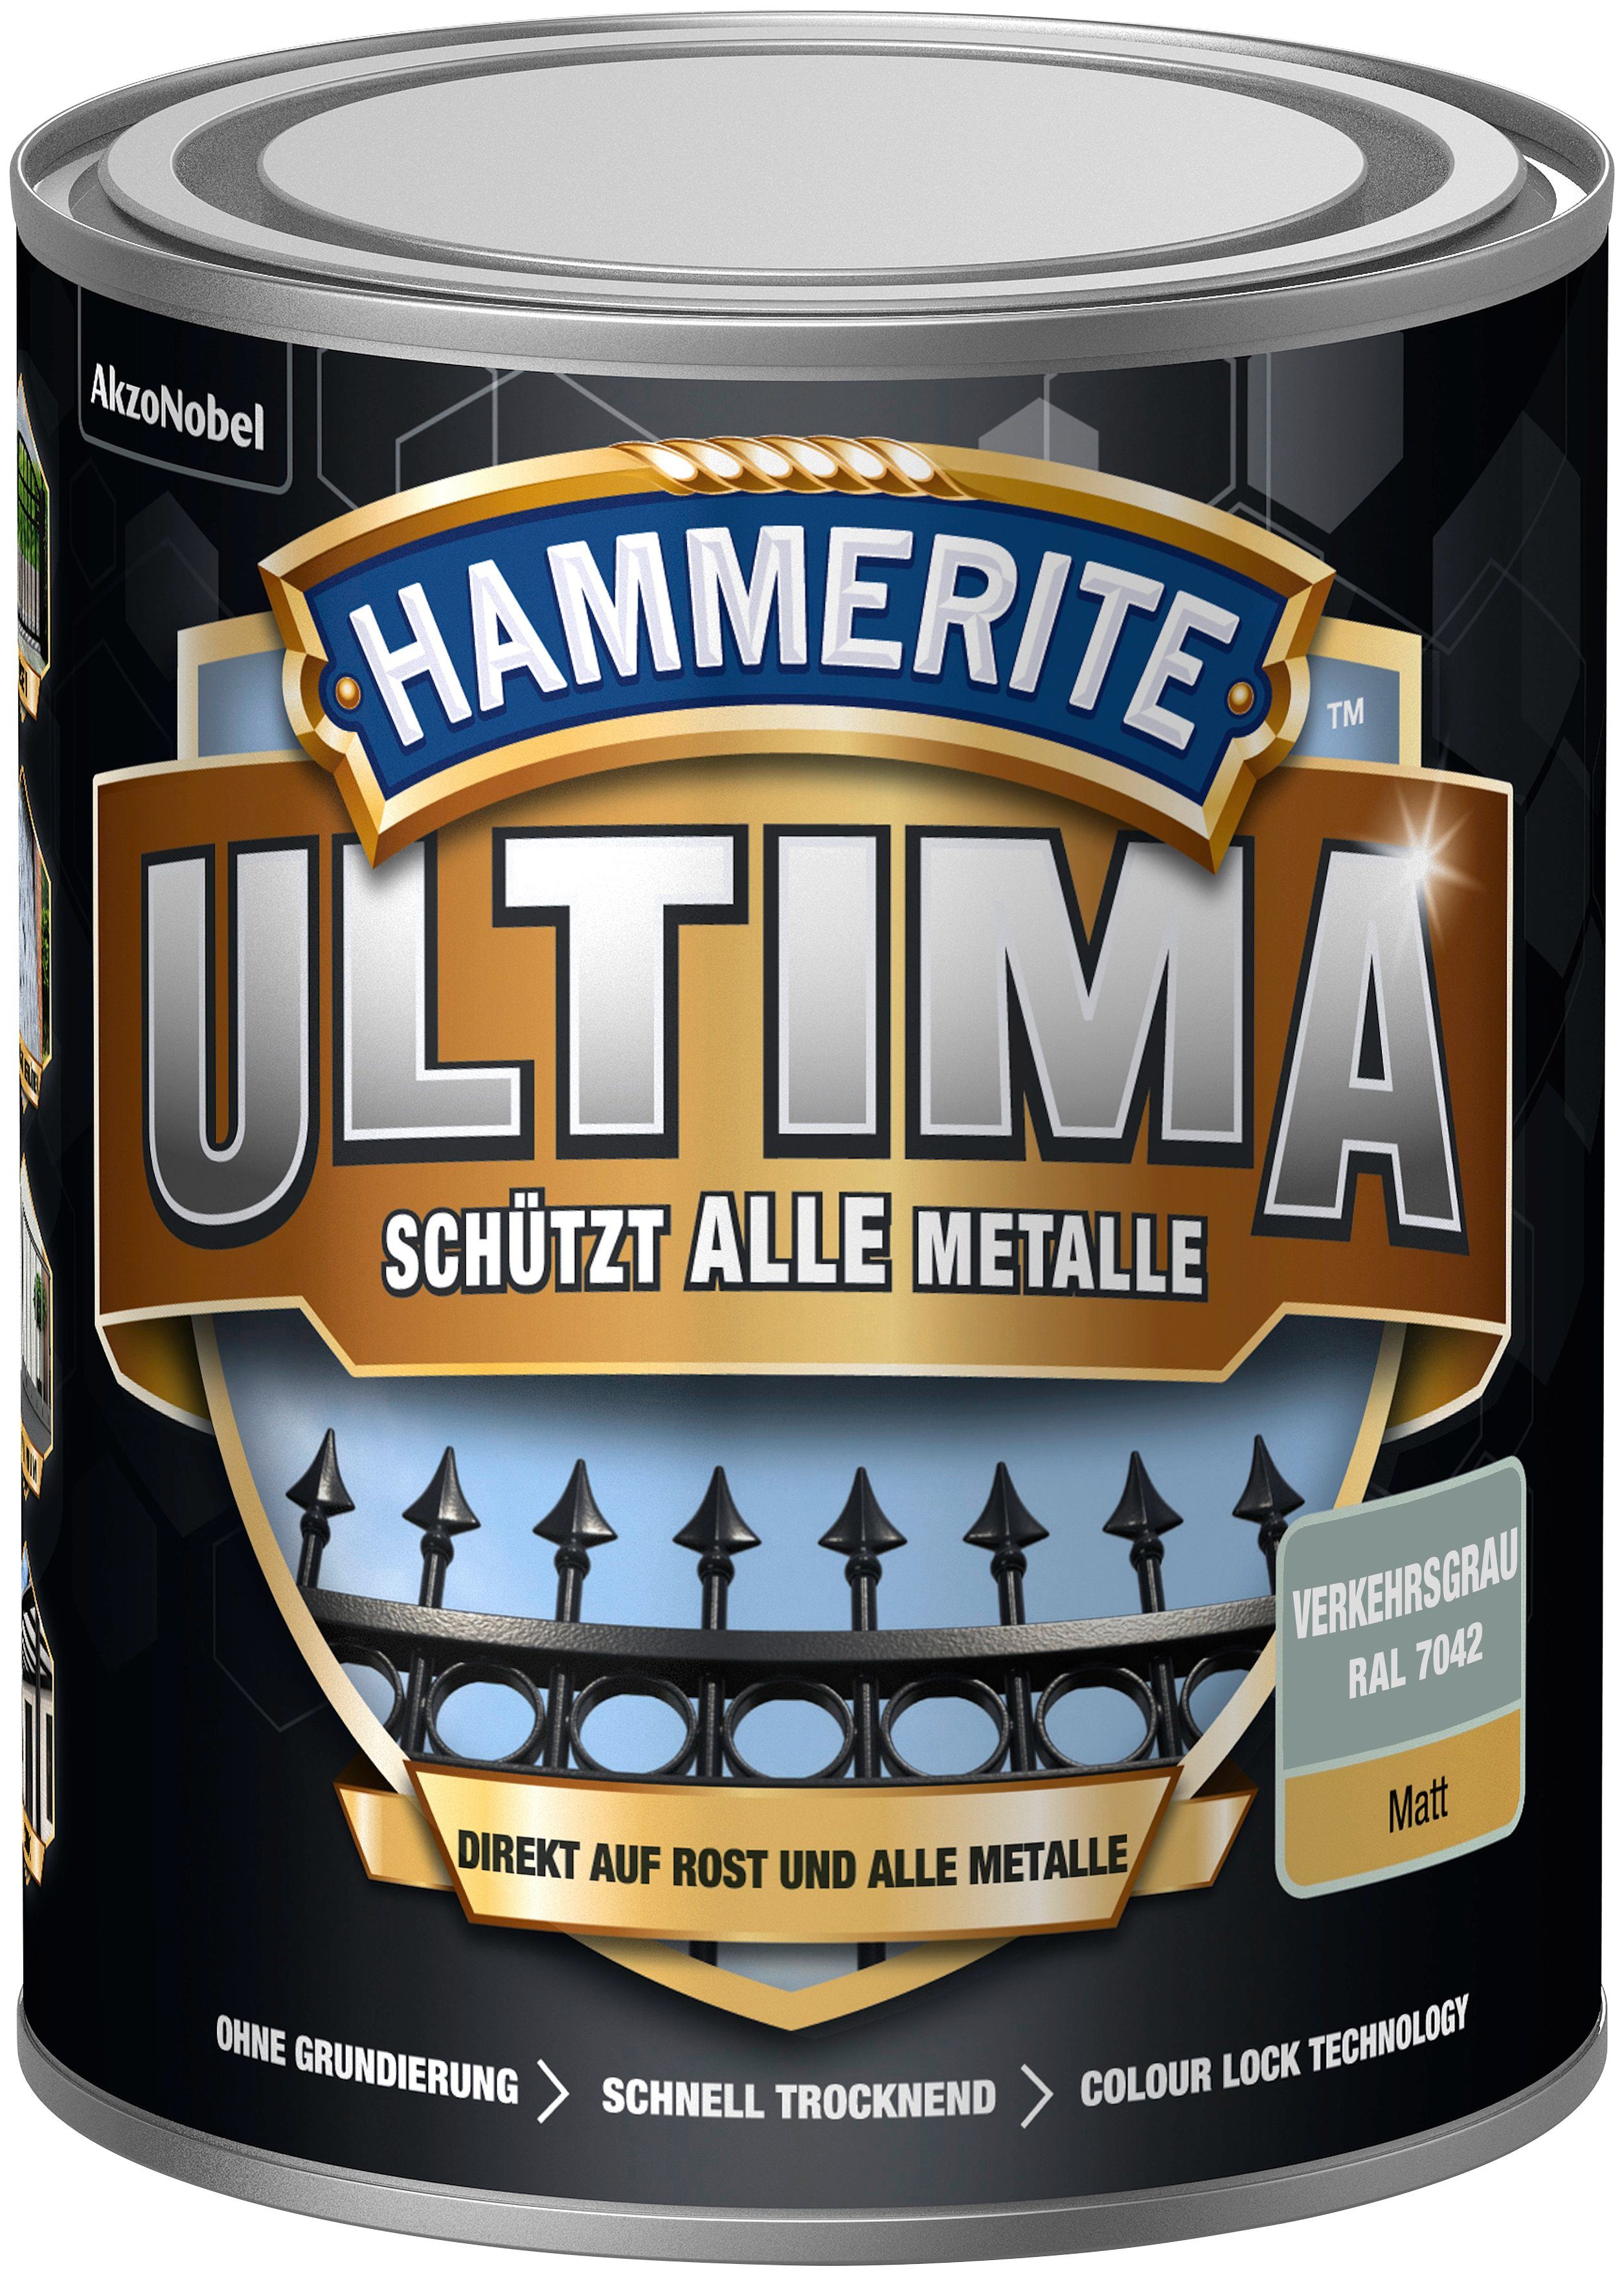 Hammerite  Metallschutzlack ULTIMA schützt alle Metalle, 3in1, verkehrsgrau RAL 7042, matt